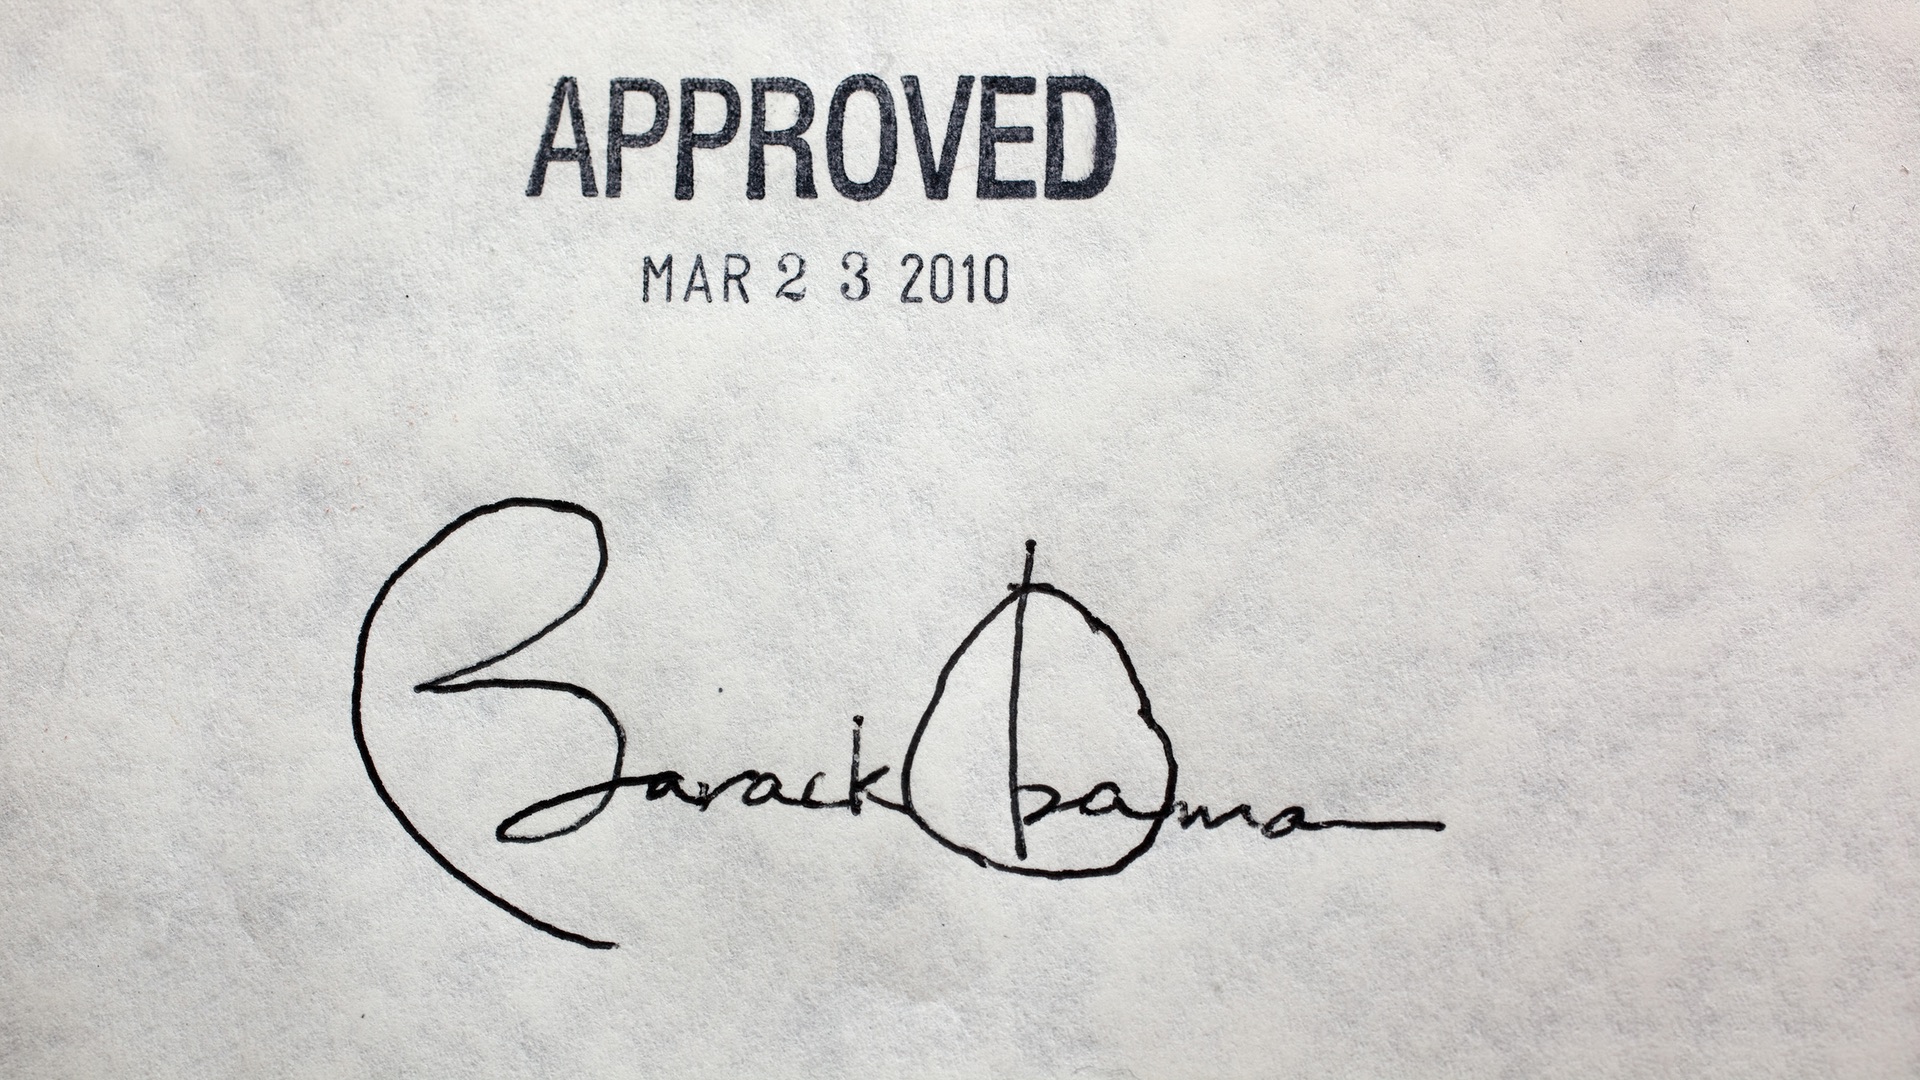 President Obama's Signature